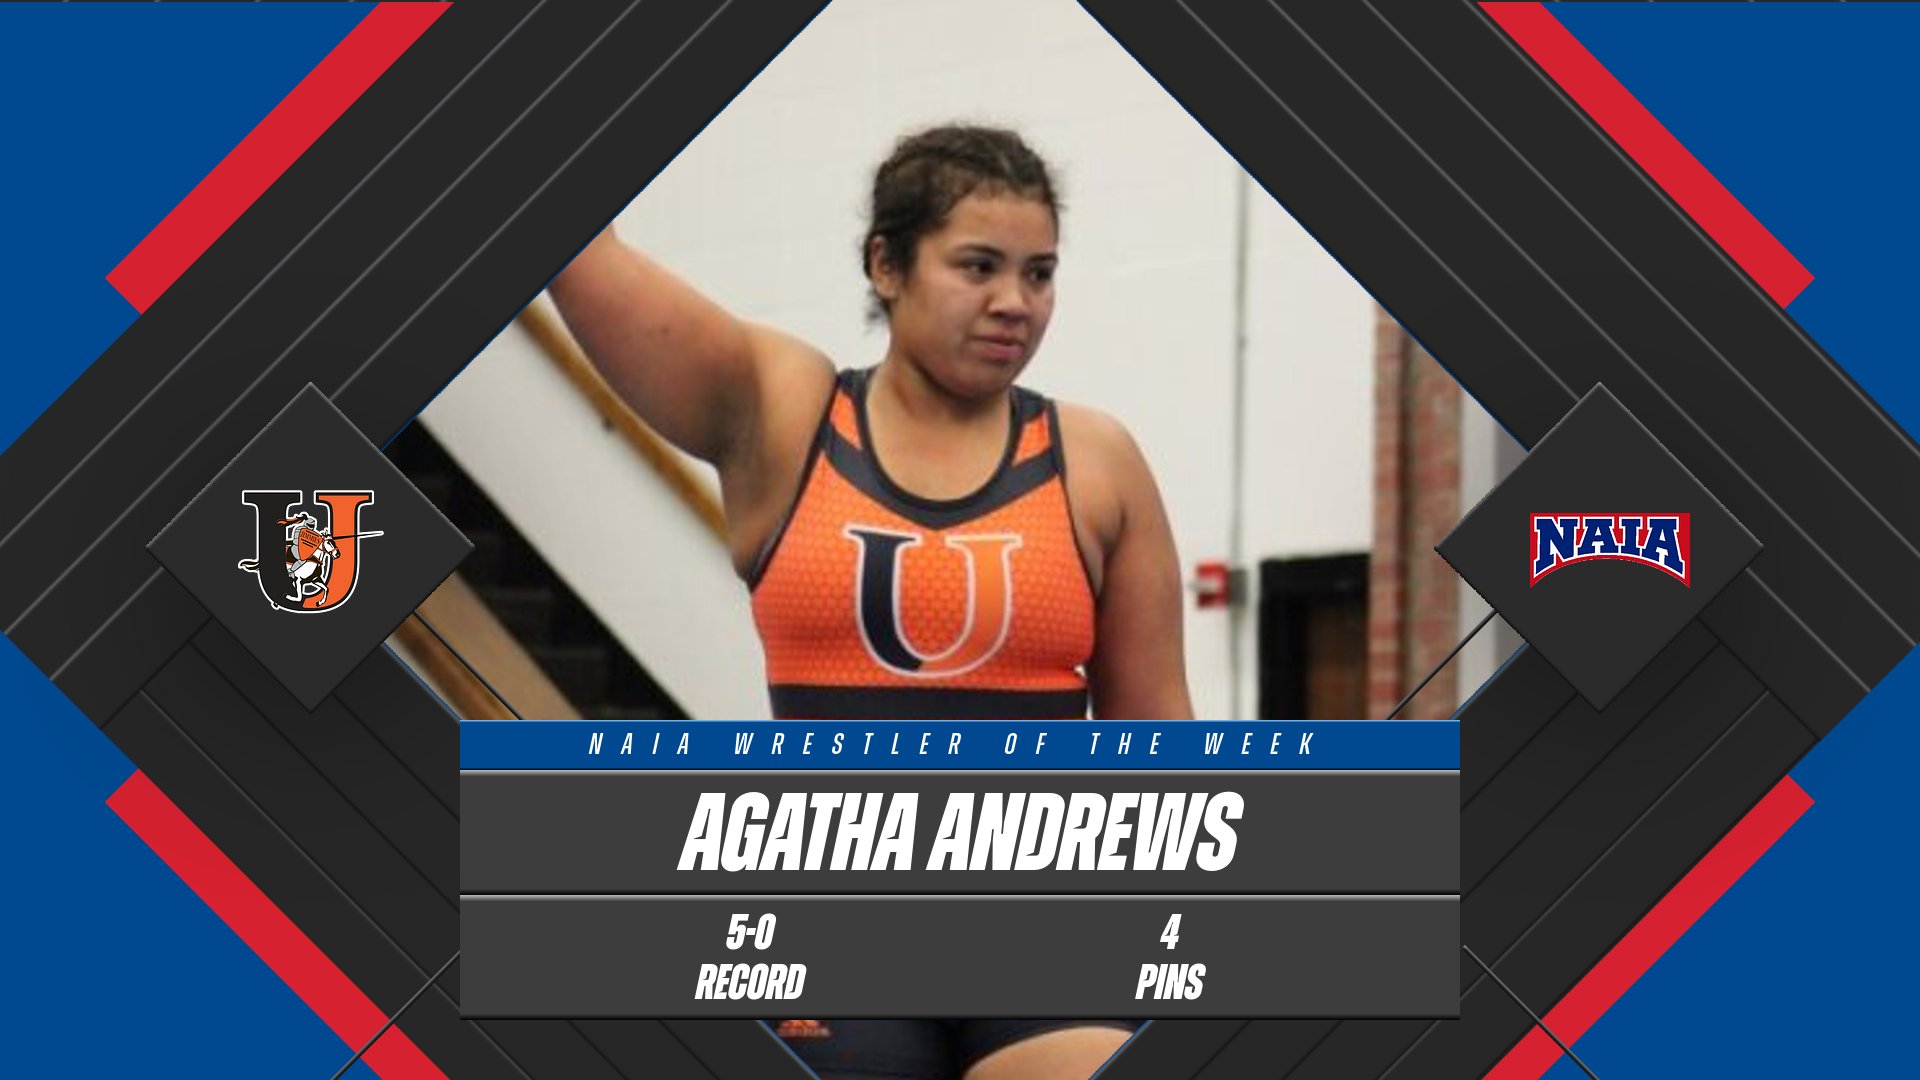 Agatha Andrews named NAIA Women's Wrestler of the Week